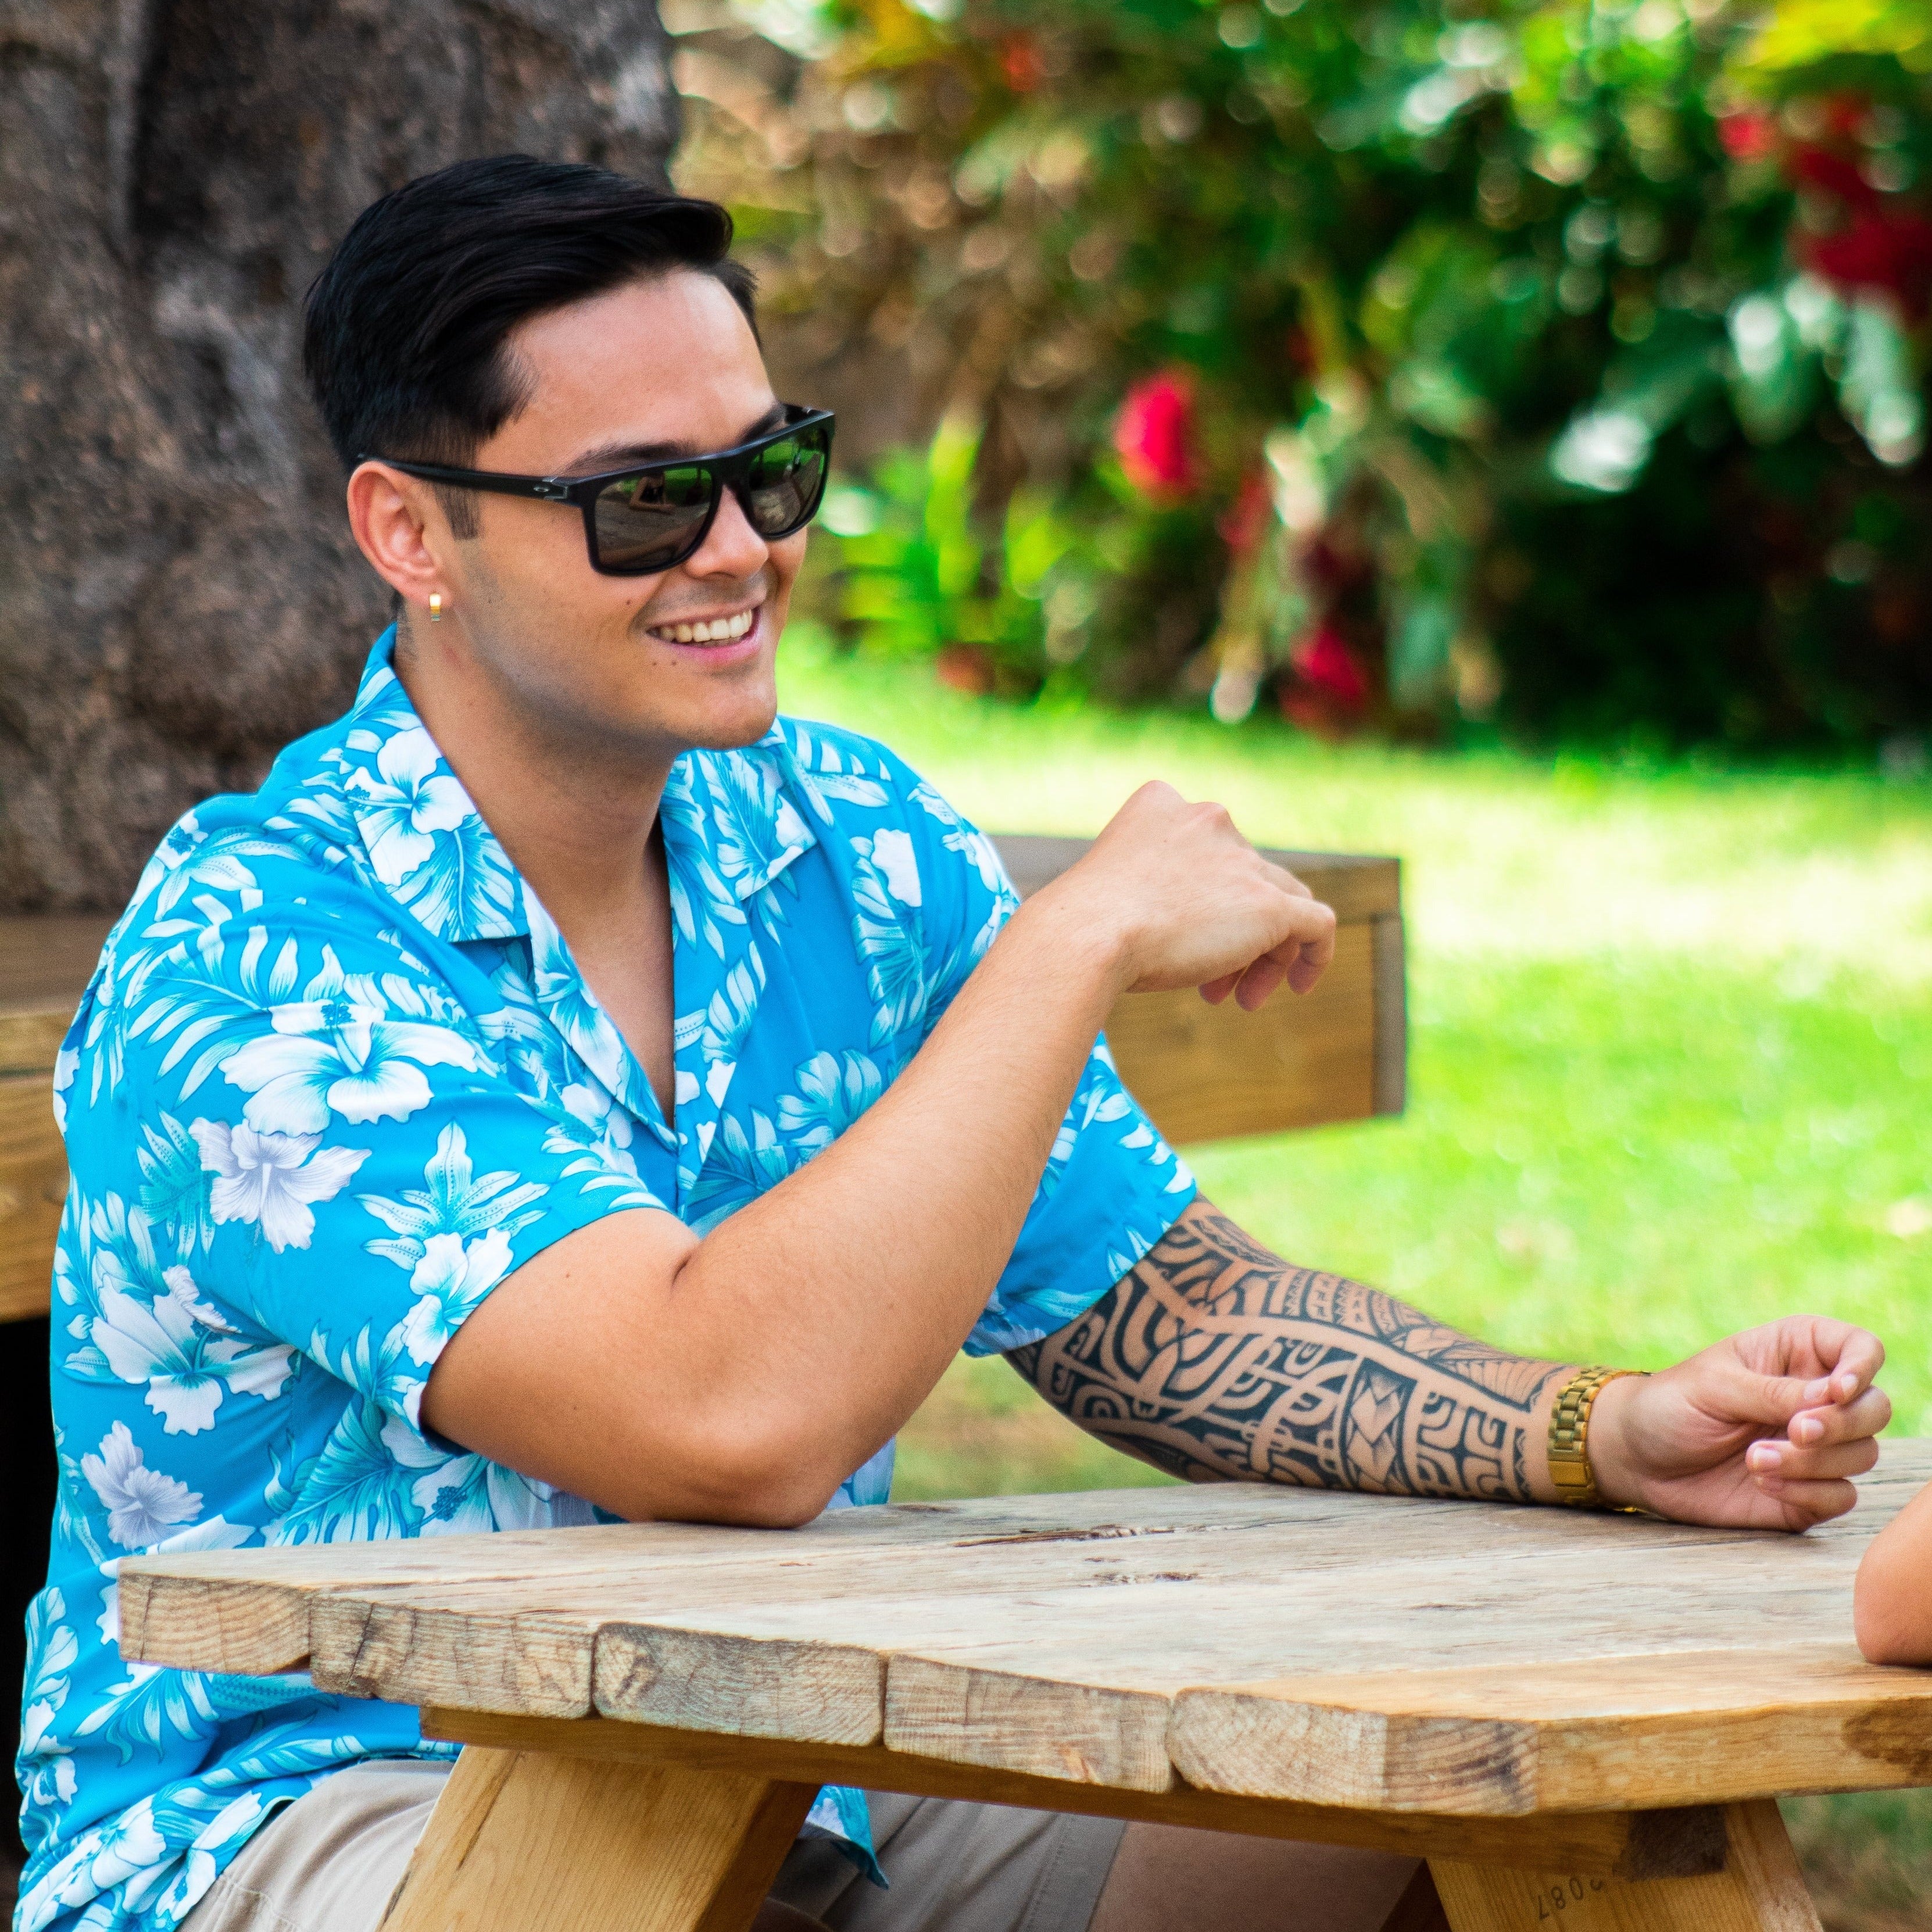 Ninth Isle Big Hibiscus Men's Aloha Shirt, Made in Hawaii